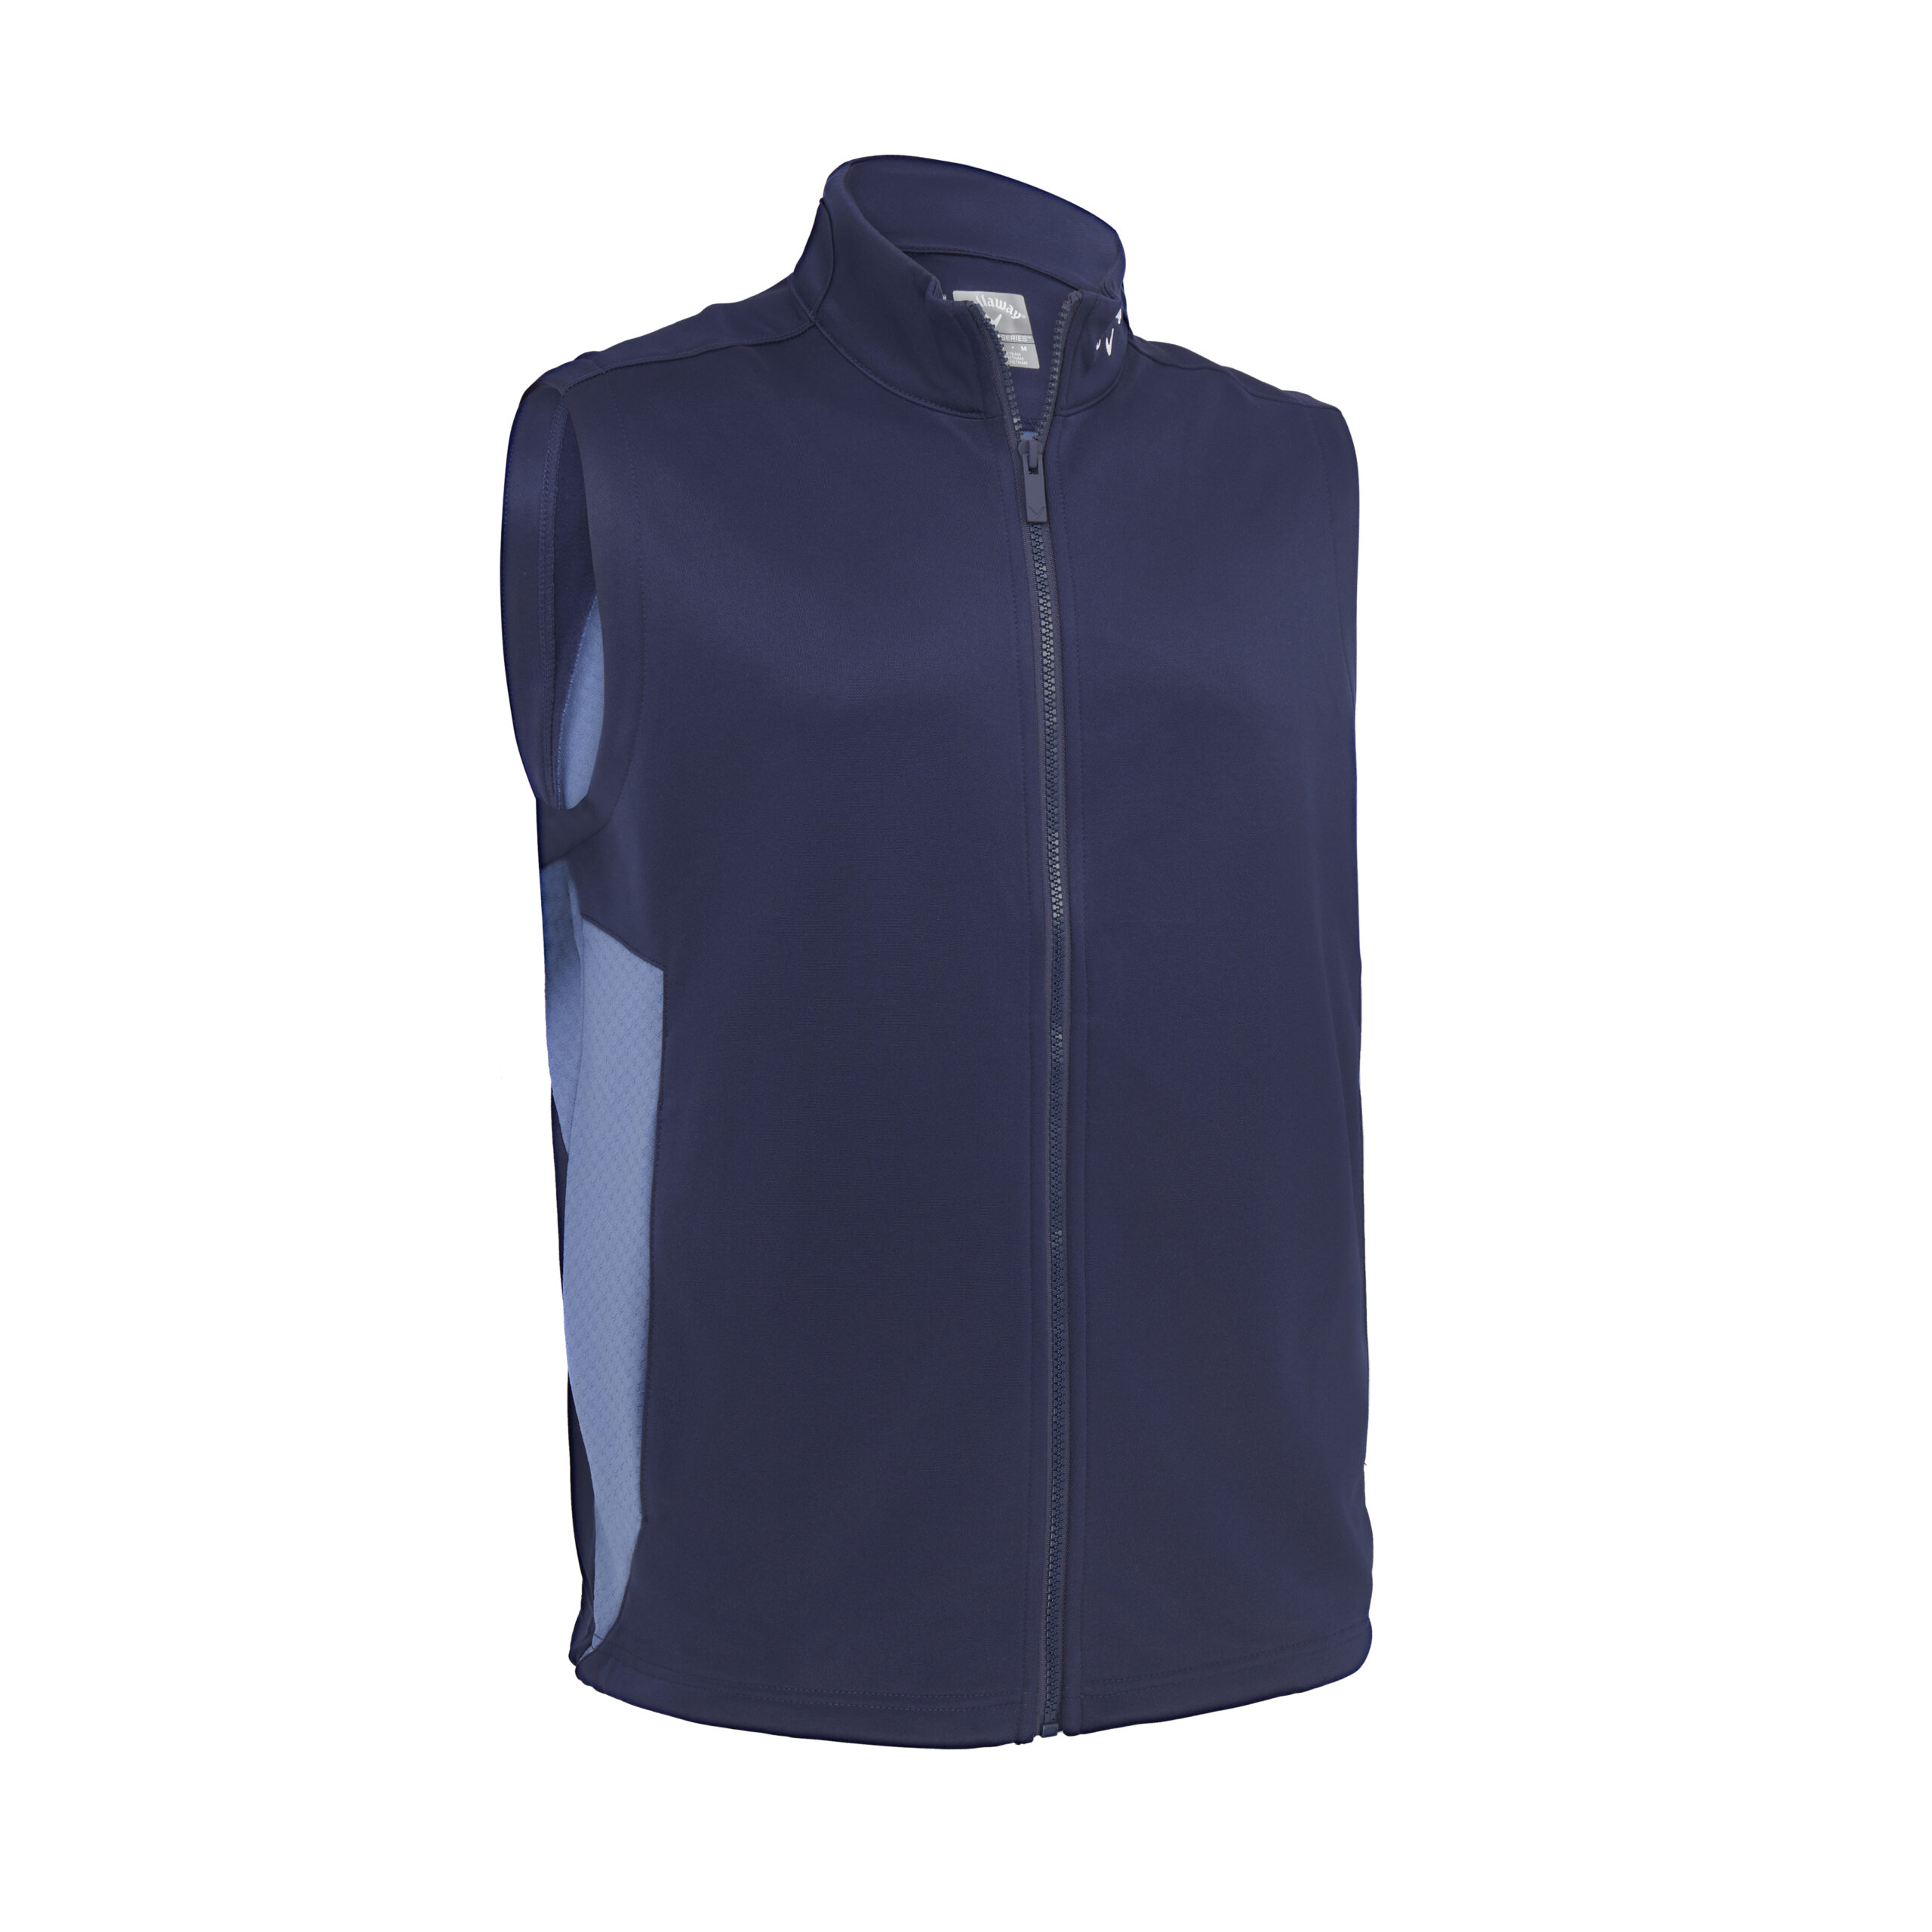 Callaway Chev Textured pánská golfová vesta, tmavě modrá, vel. S